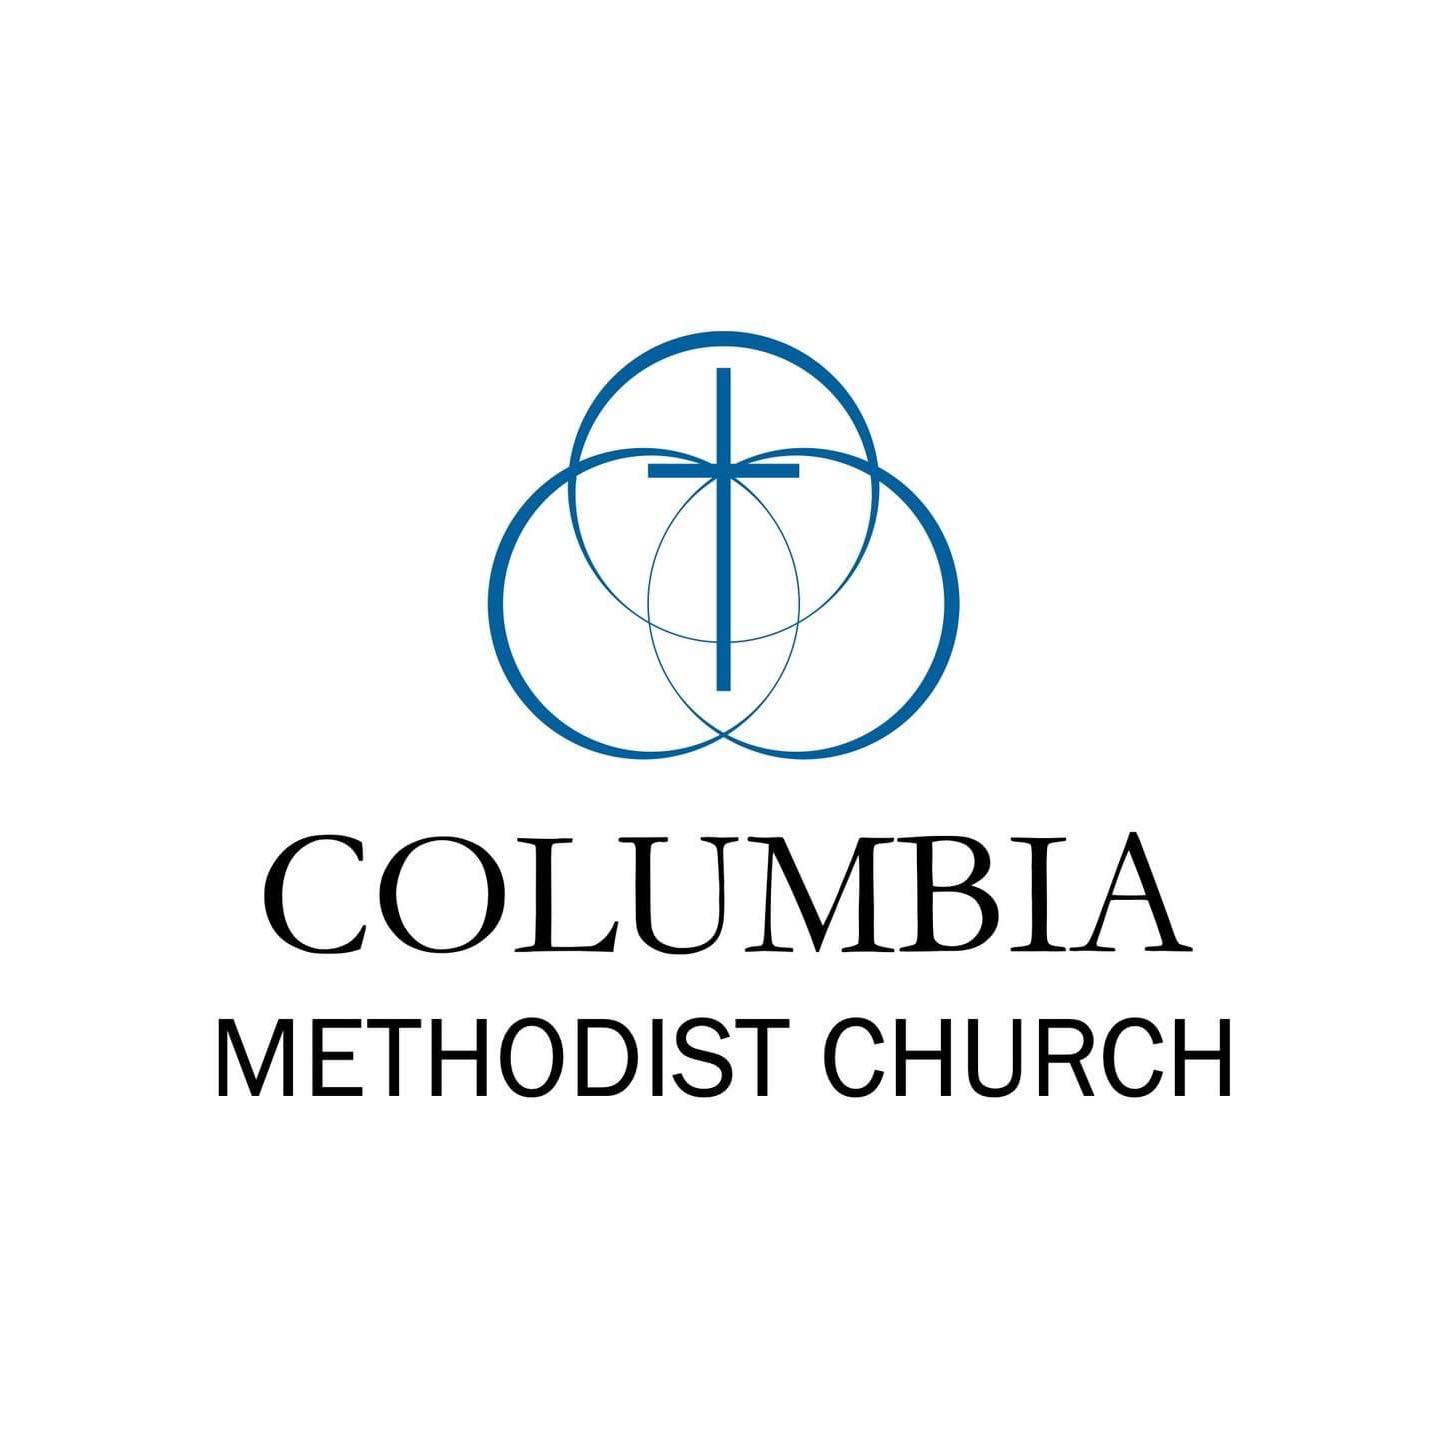 Columbia Methodist Church